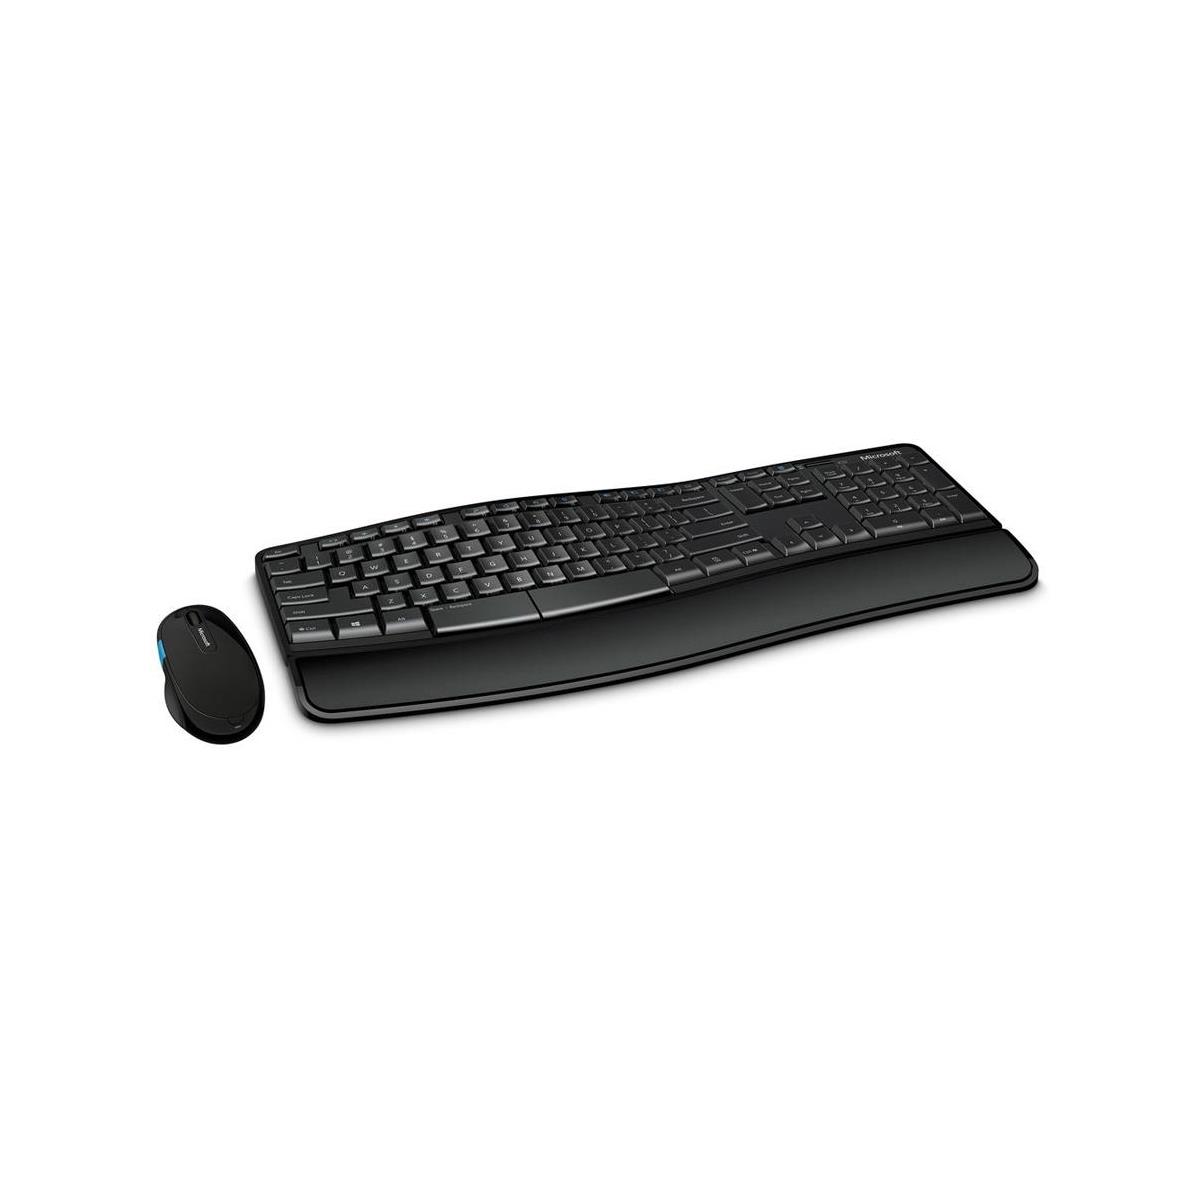 Microsoft Sculpt Comfort Desktop Wireless Keyboard and Mouse Combo, Black -  L3V-00001